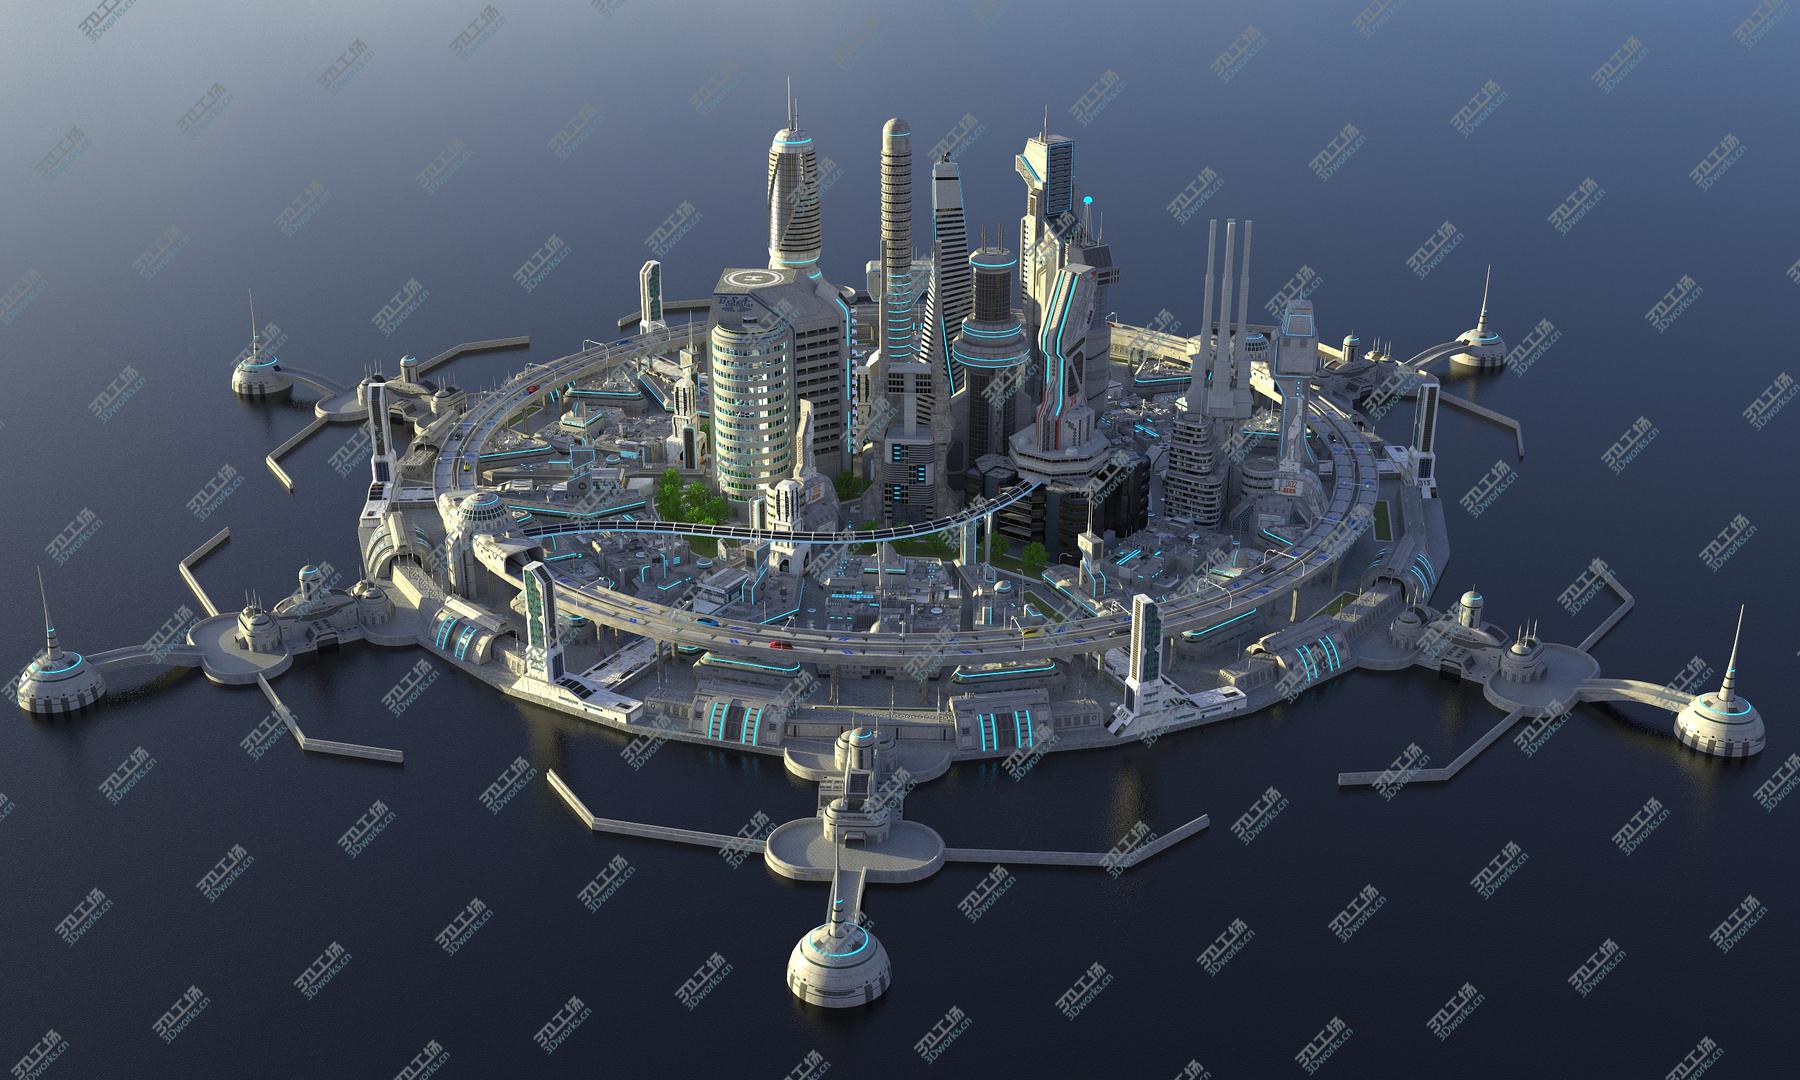 images/goods_img/2021040161/3D futuristic city/1.jpg